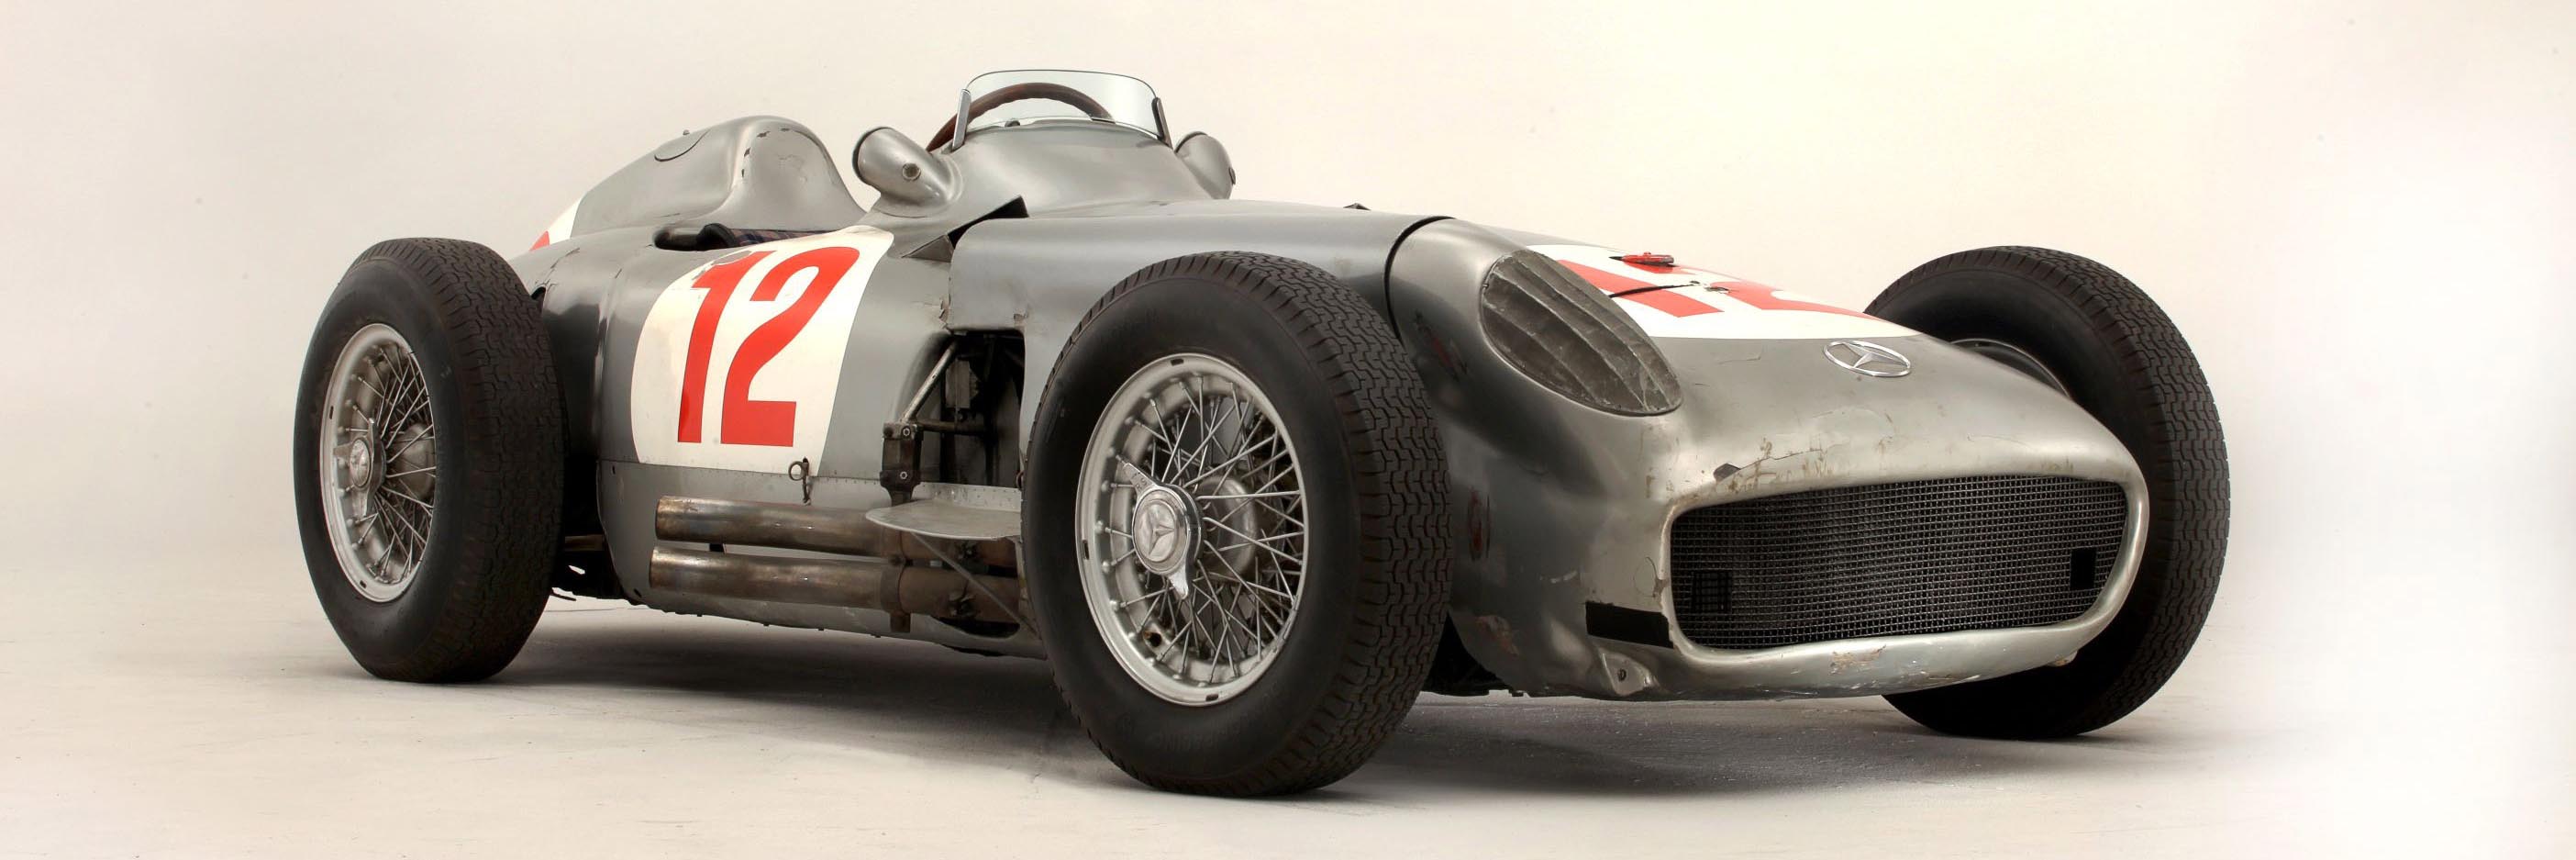 Juan Manuel Fangio's Mercedes F1 auction record-holding W196